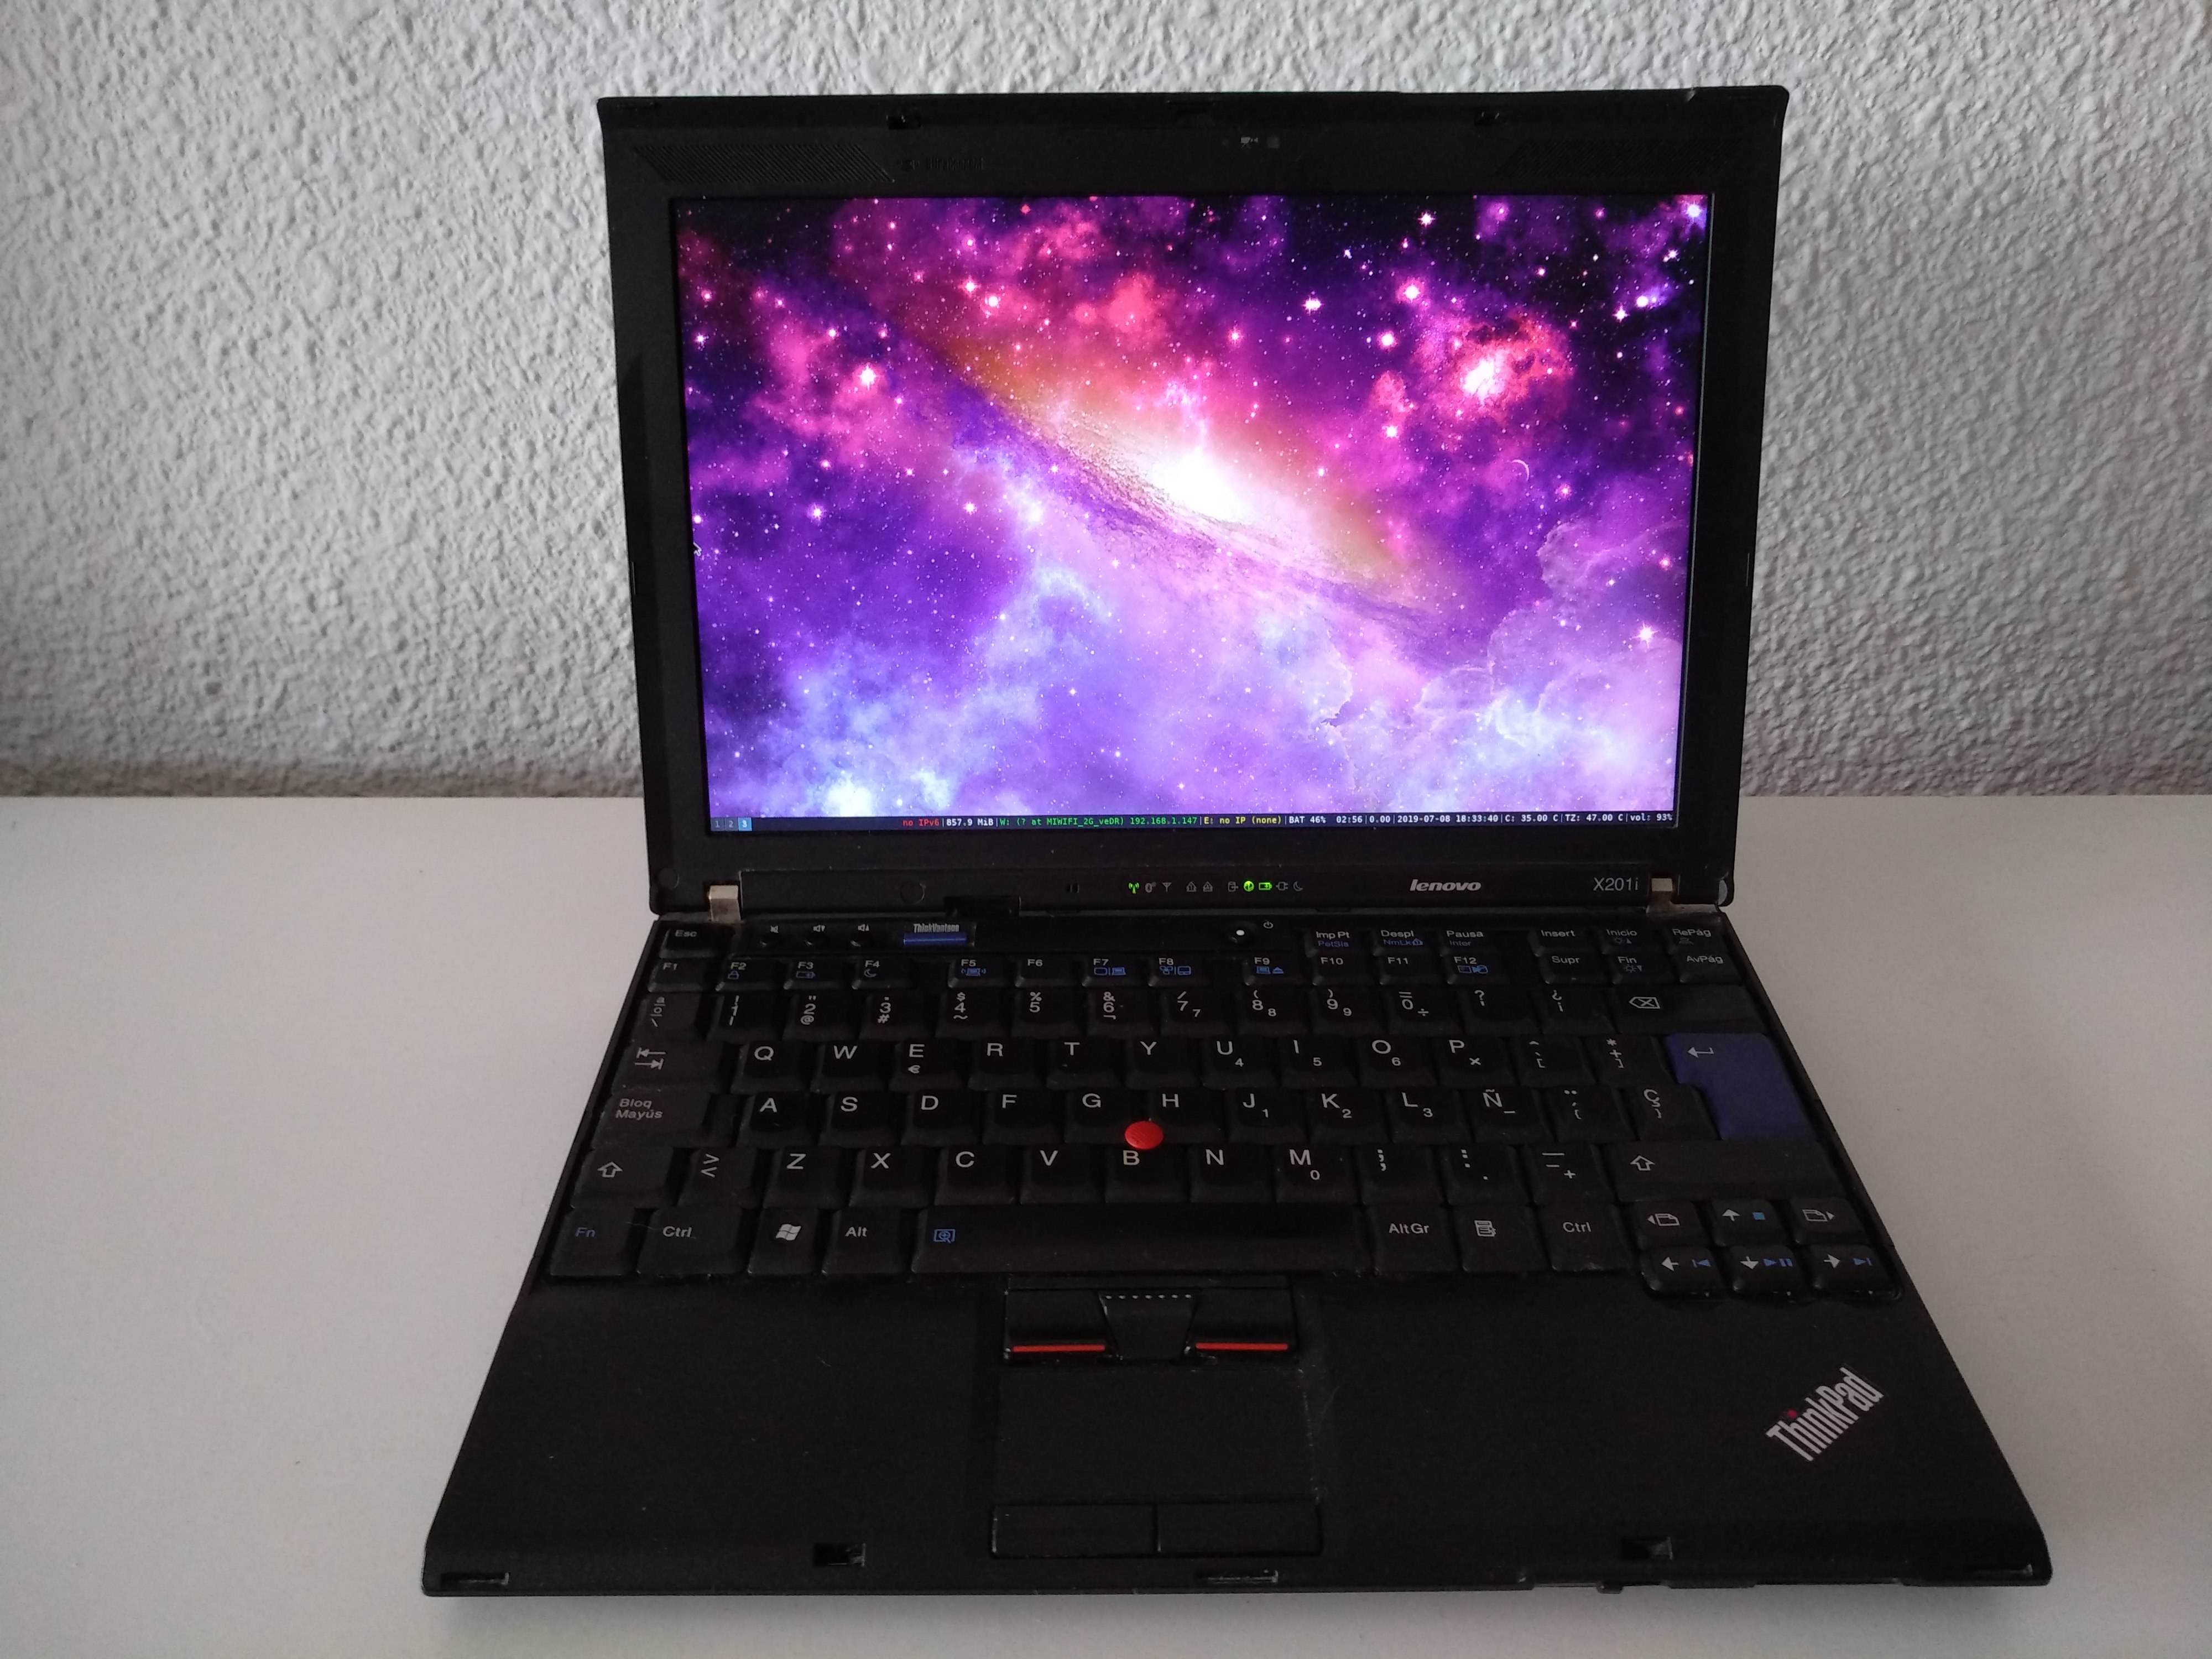 Instal·lant OpenBSD 6.5 al portàtil Lenovo Thinkpad x201i